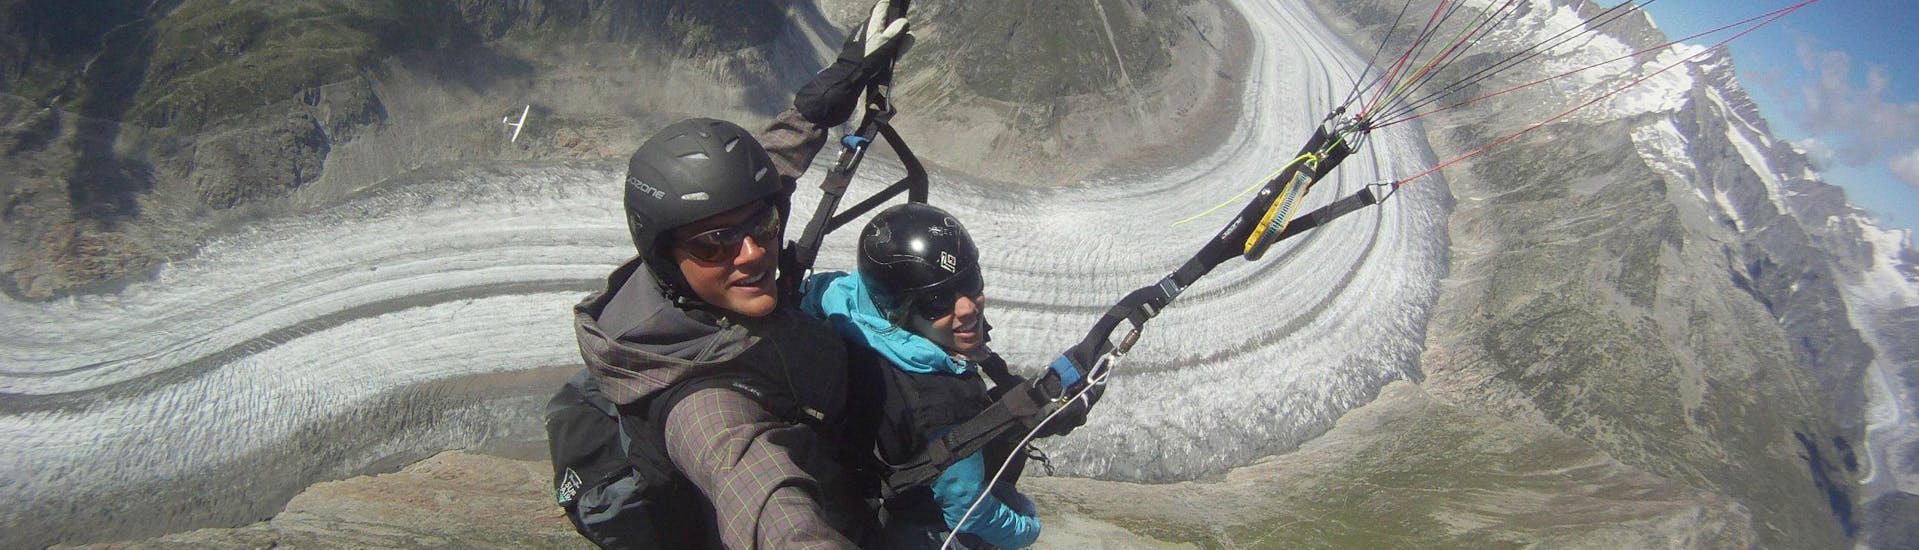 Tandem Paragliding over the Aletsch Arena - Eagle.